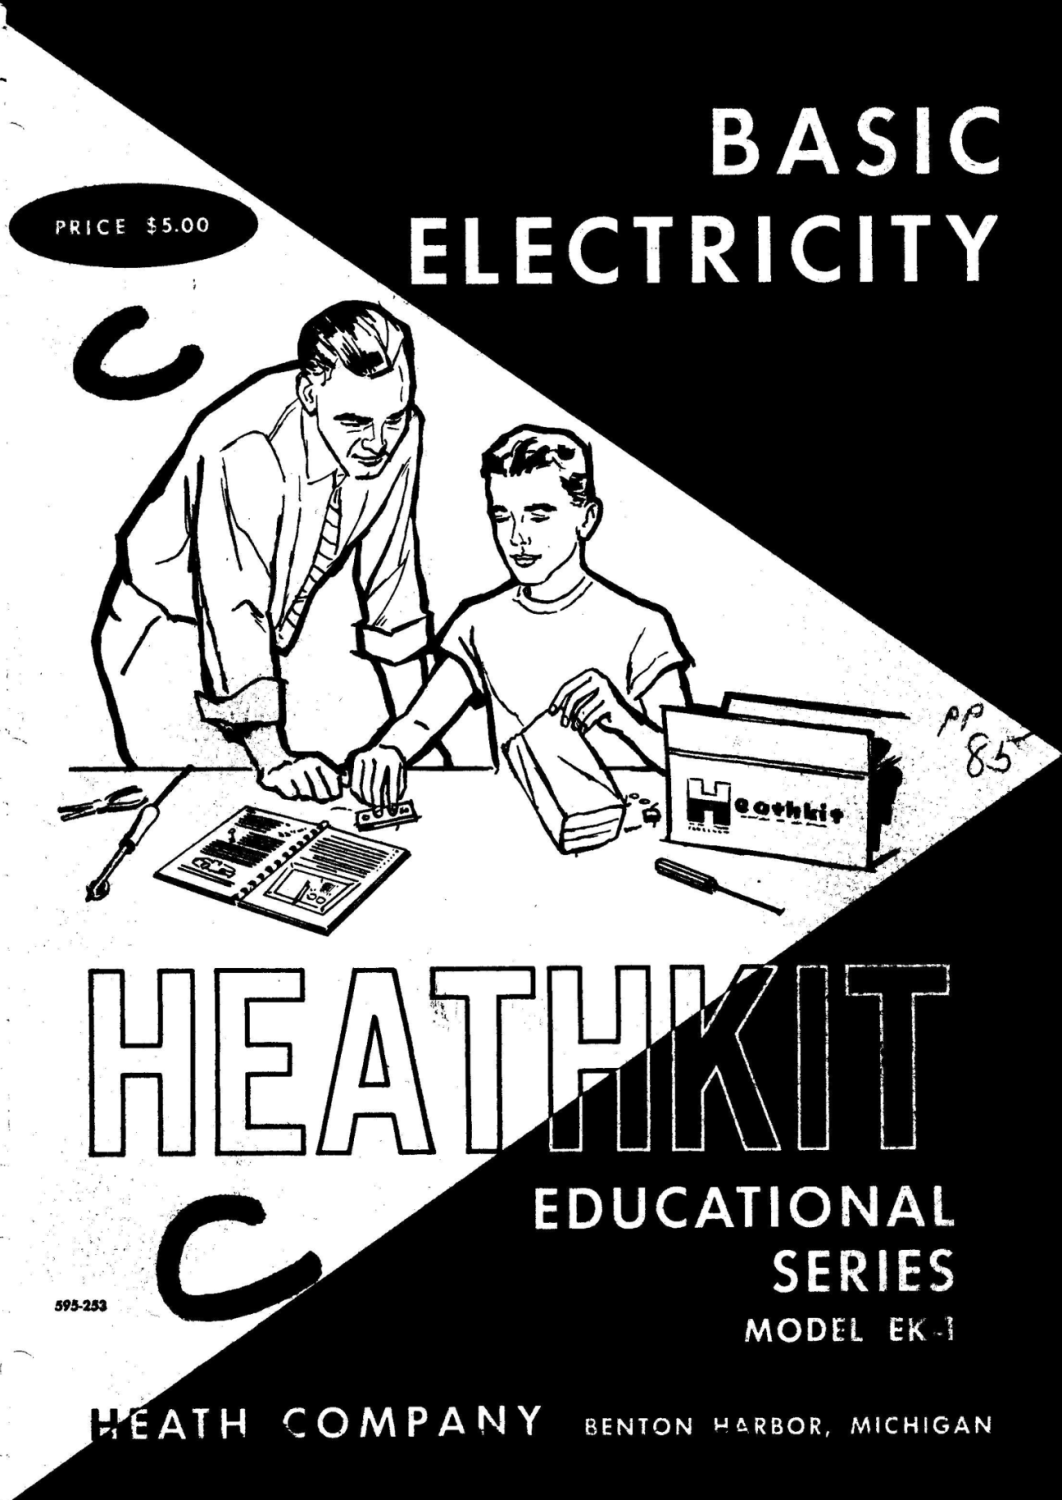 Heathkit EK-1 Heathkit Educational Series - Basic Electricity